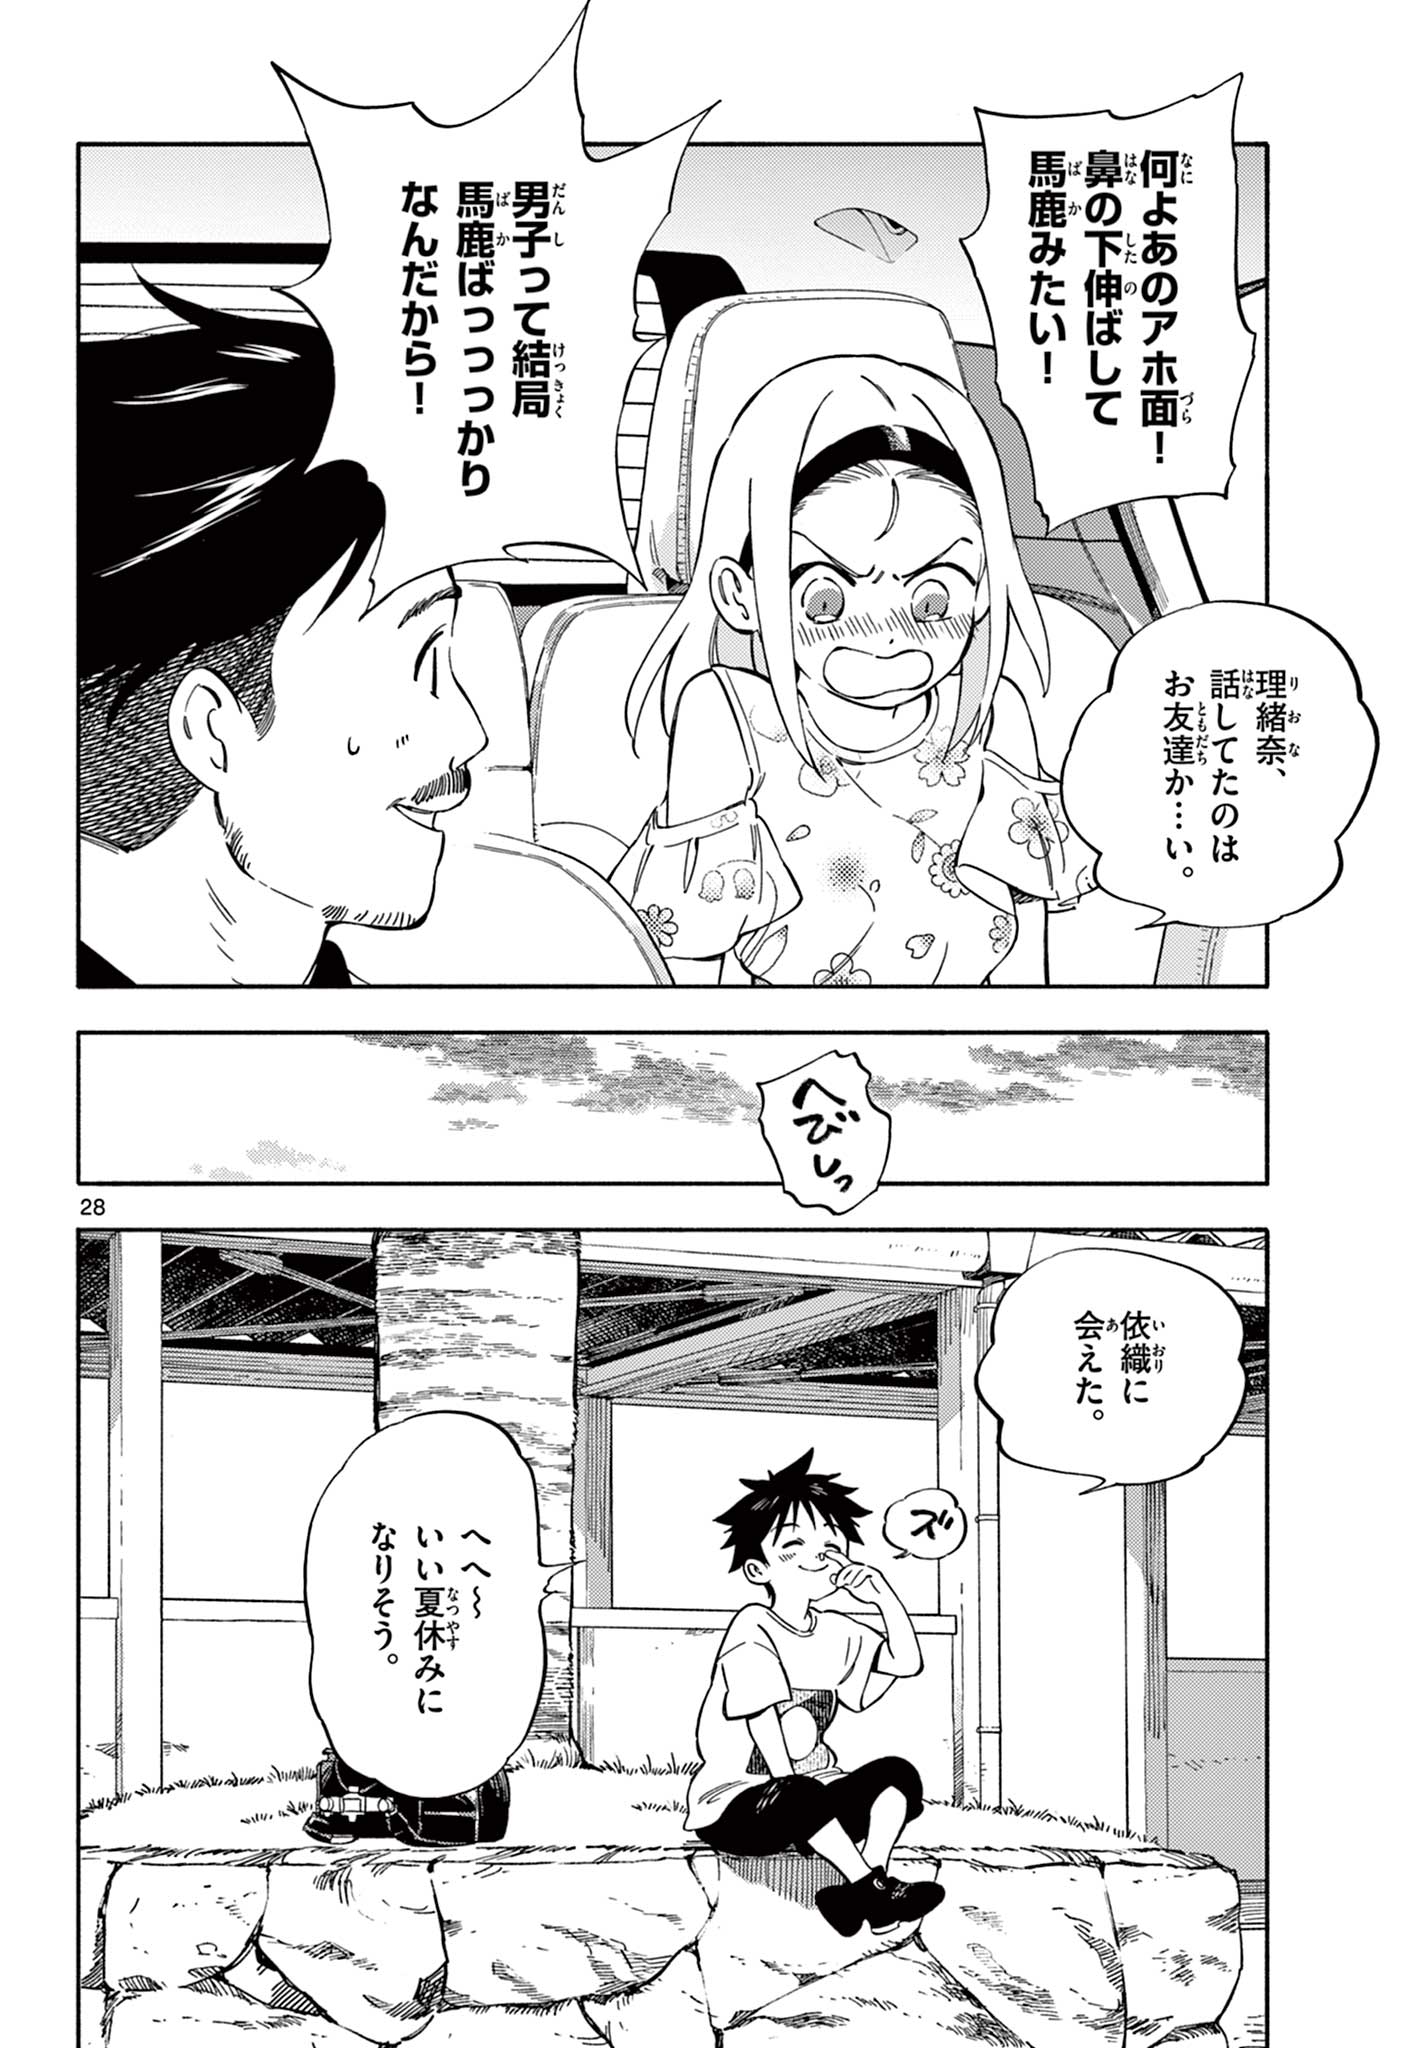 Nami no Shijima no Horizont - Chapter 8.2 - Page 14